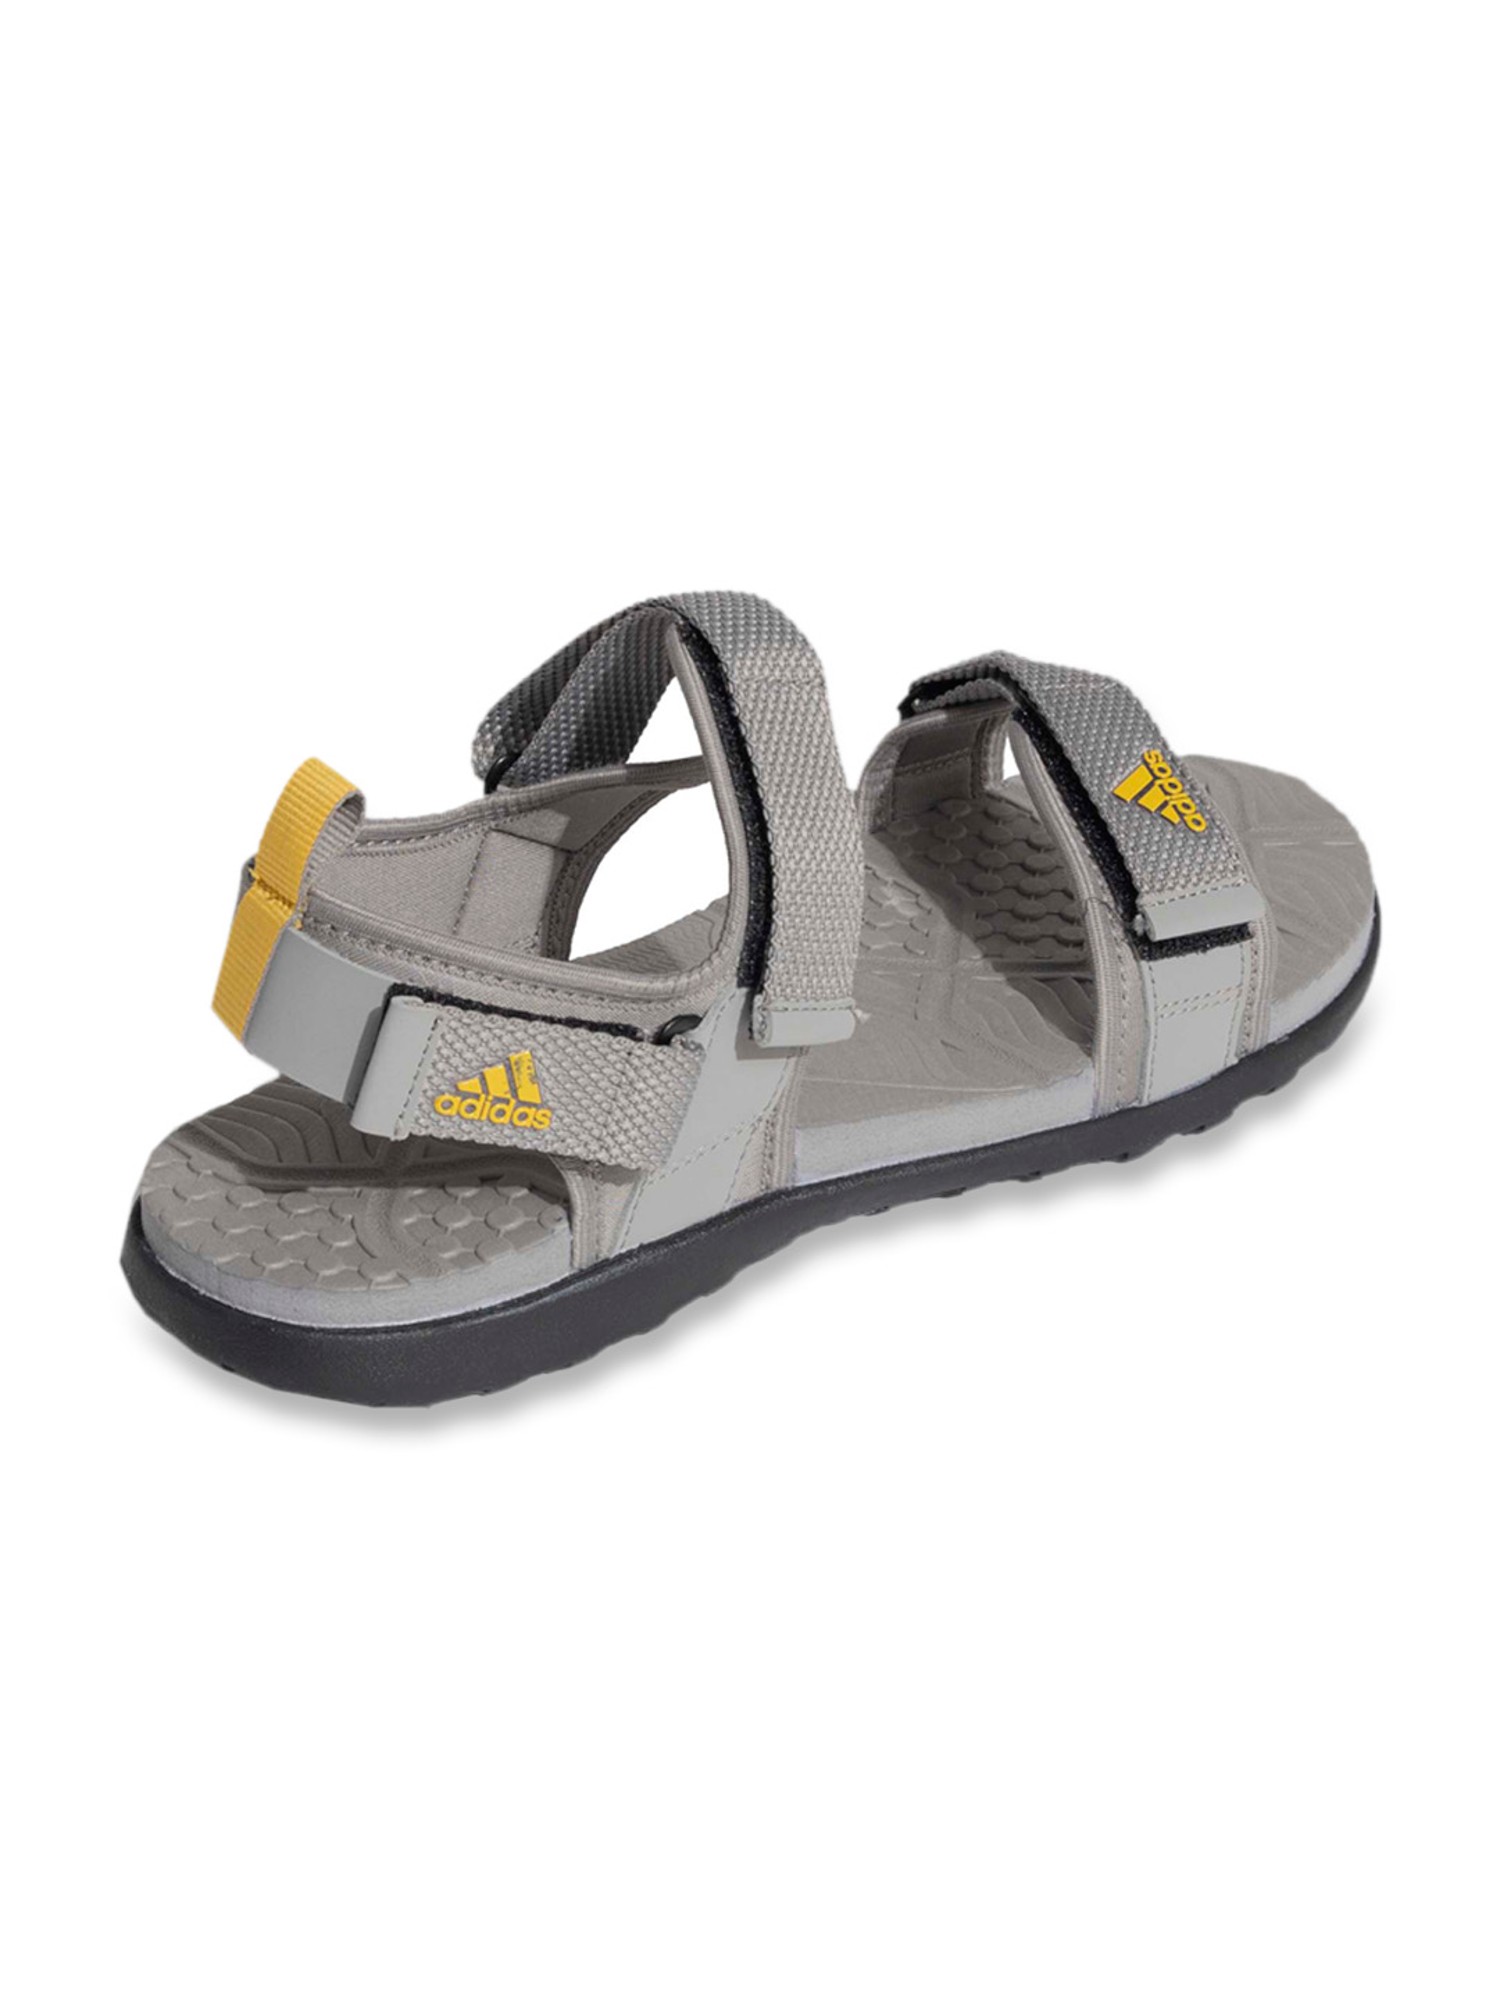 Buy Black Sandals for Boys by Adidas Kids Online  Ajiocom